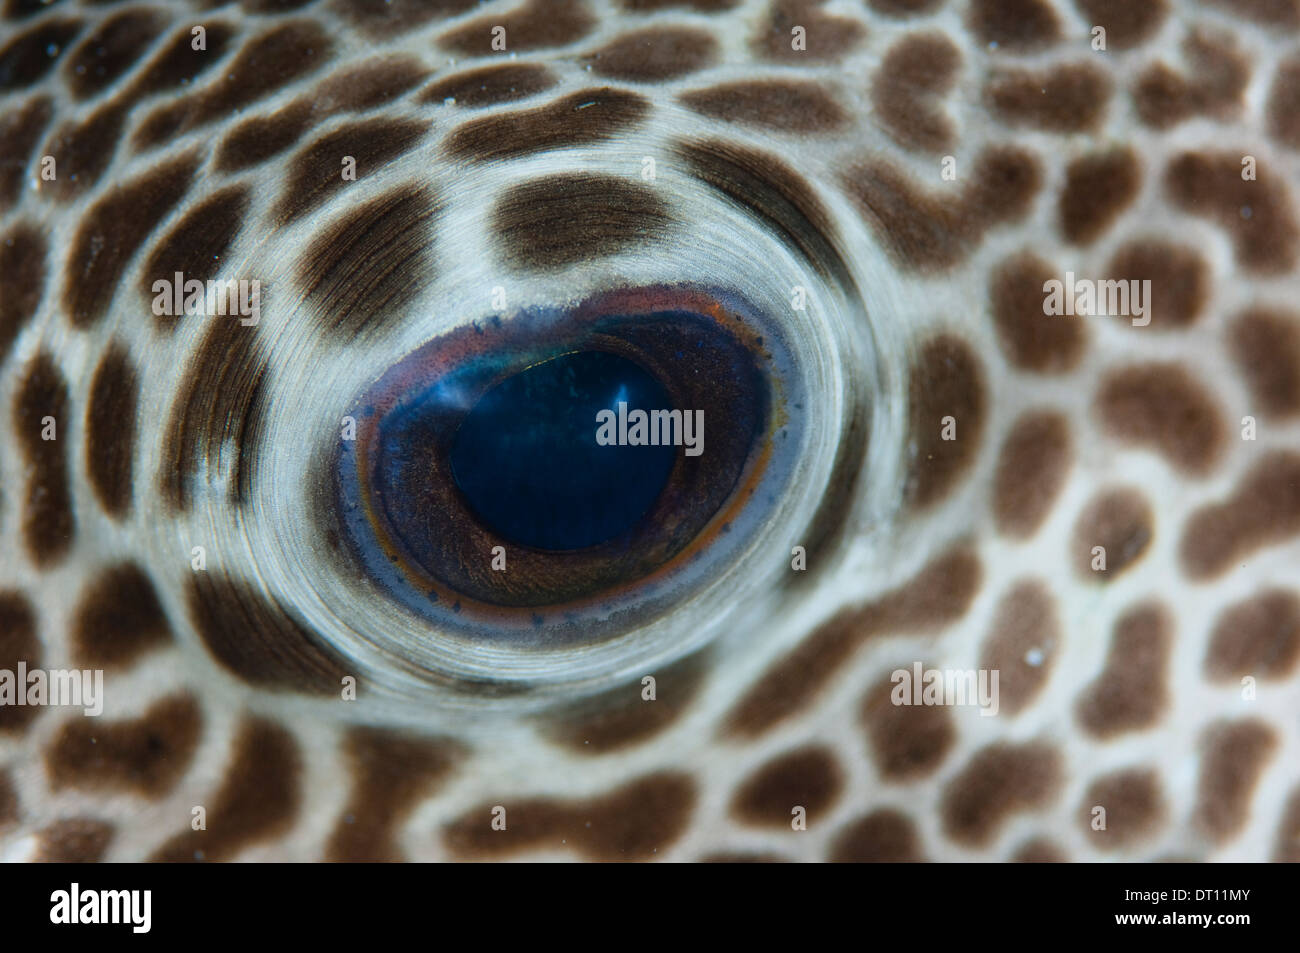 Starry Pufferfish, Arothron stellatus, full frame close up of eye detail, Halmahera, Maluku Islands, Indonesia Stock Photo